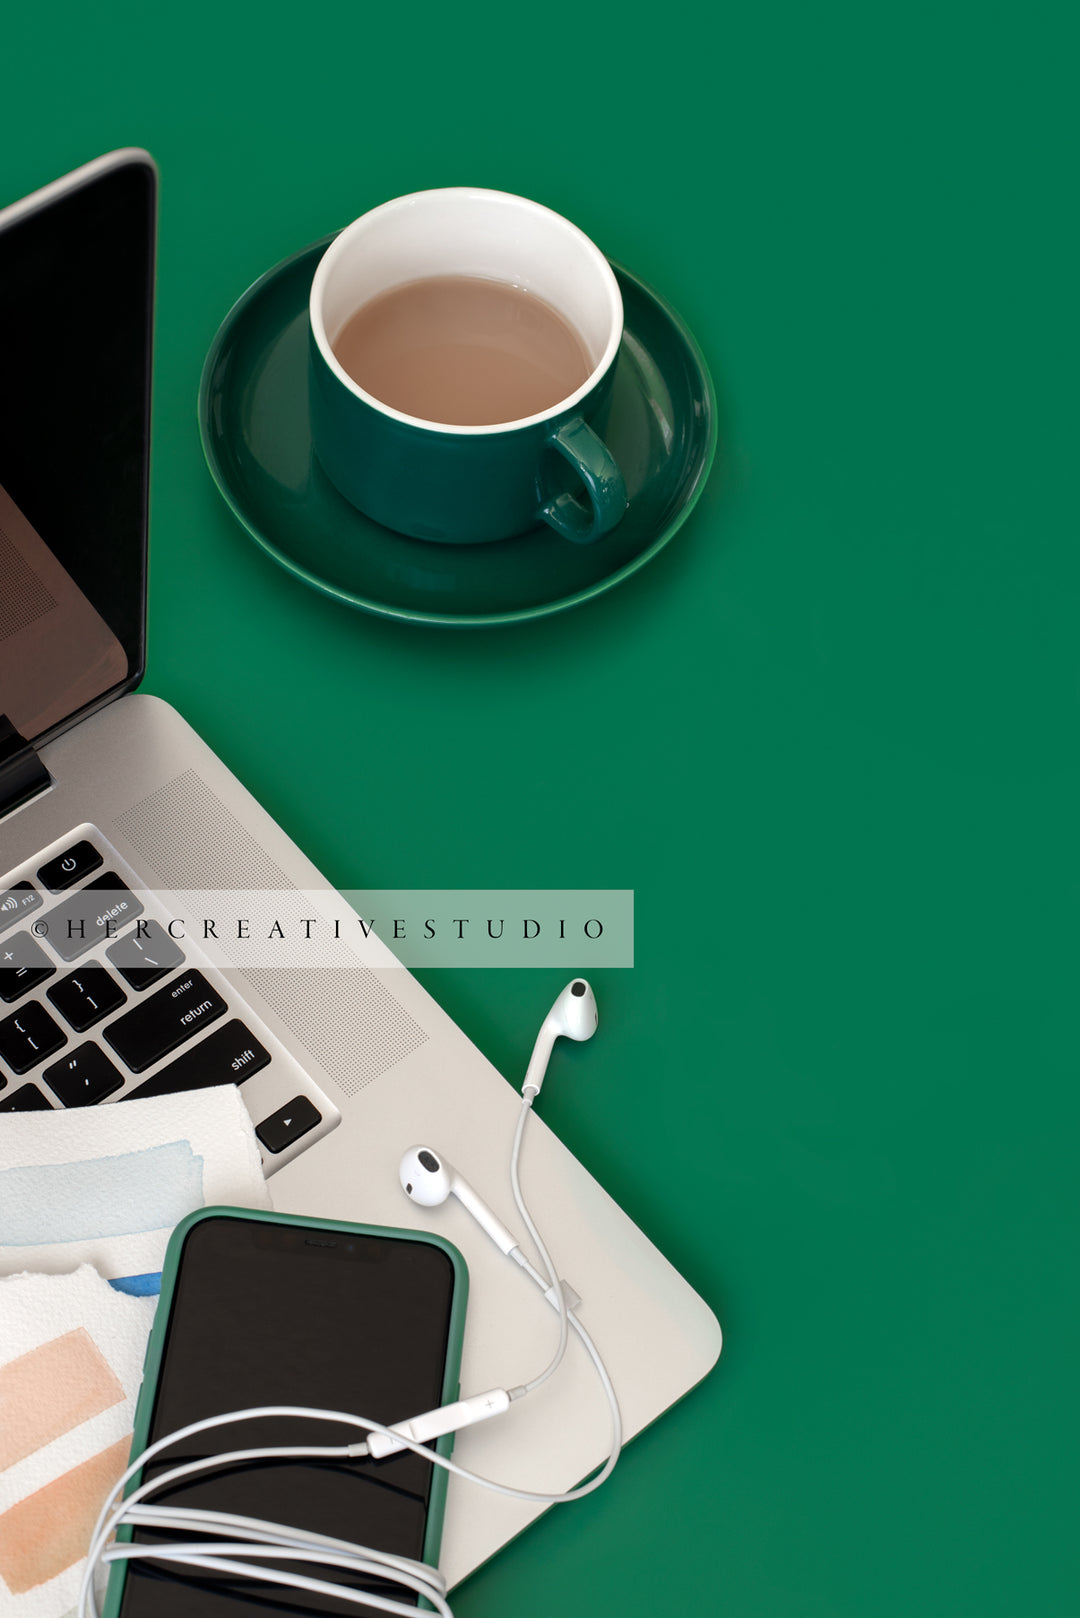 Laptop, Smartphone & Coffee on Green Background. Digital Stock Image